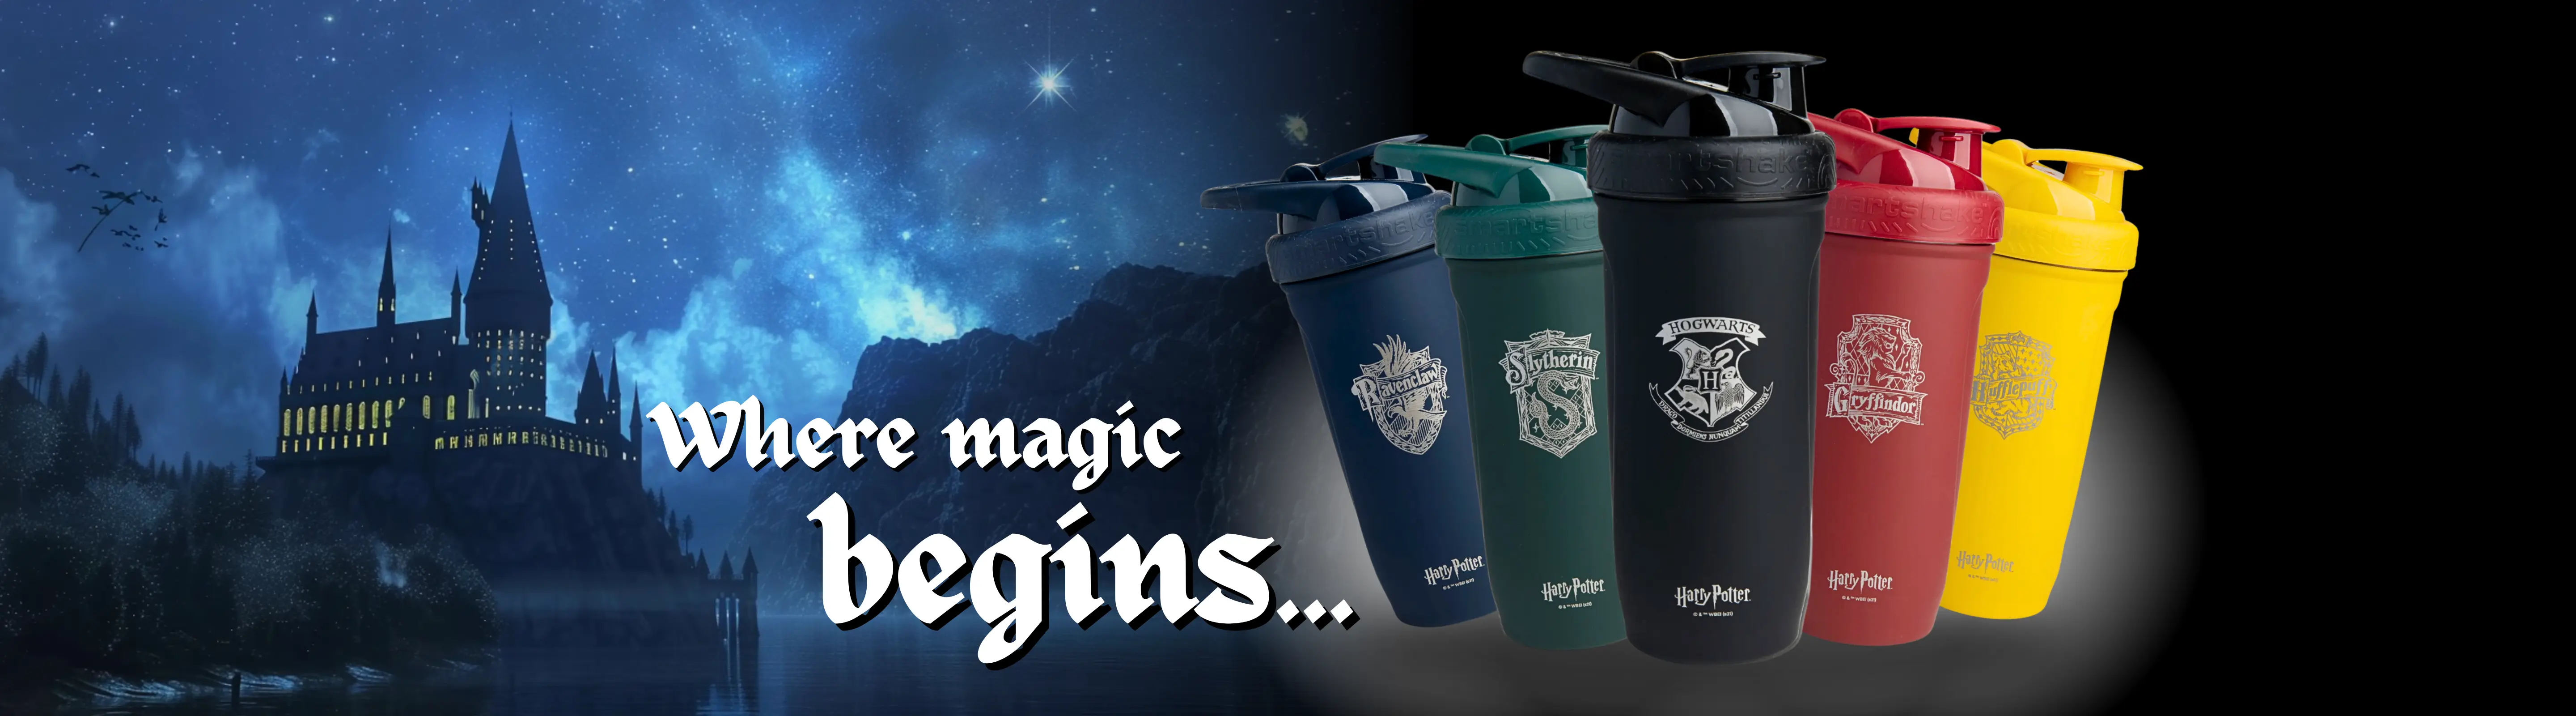 Hogwarts shakers - website